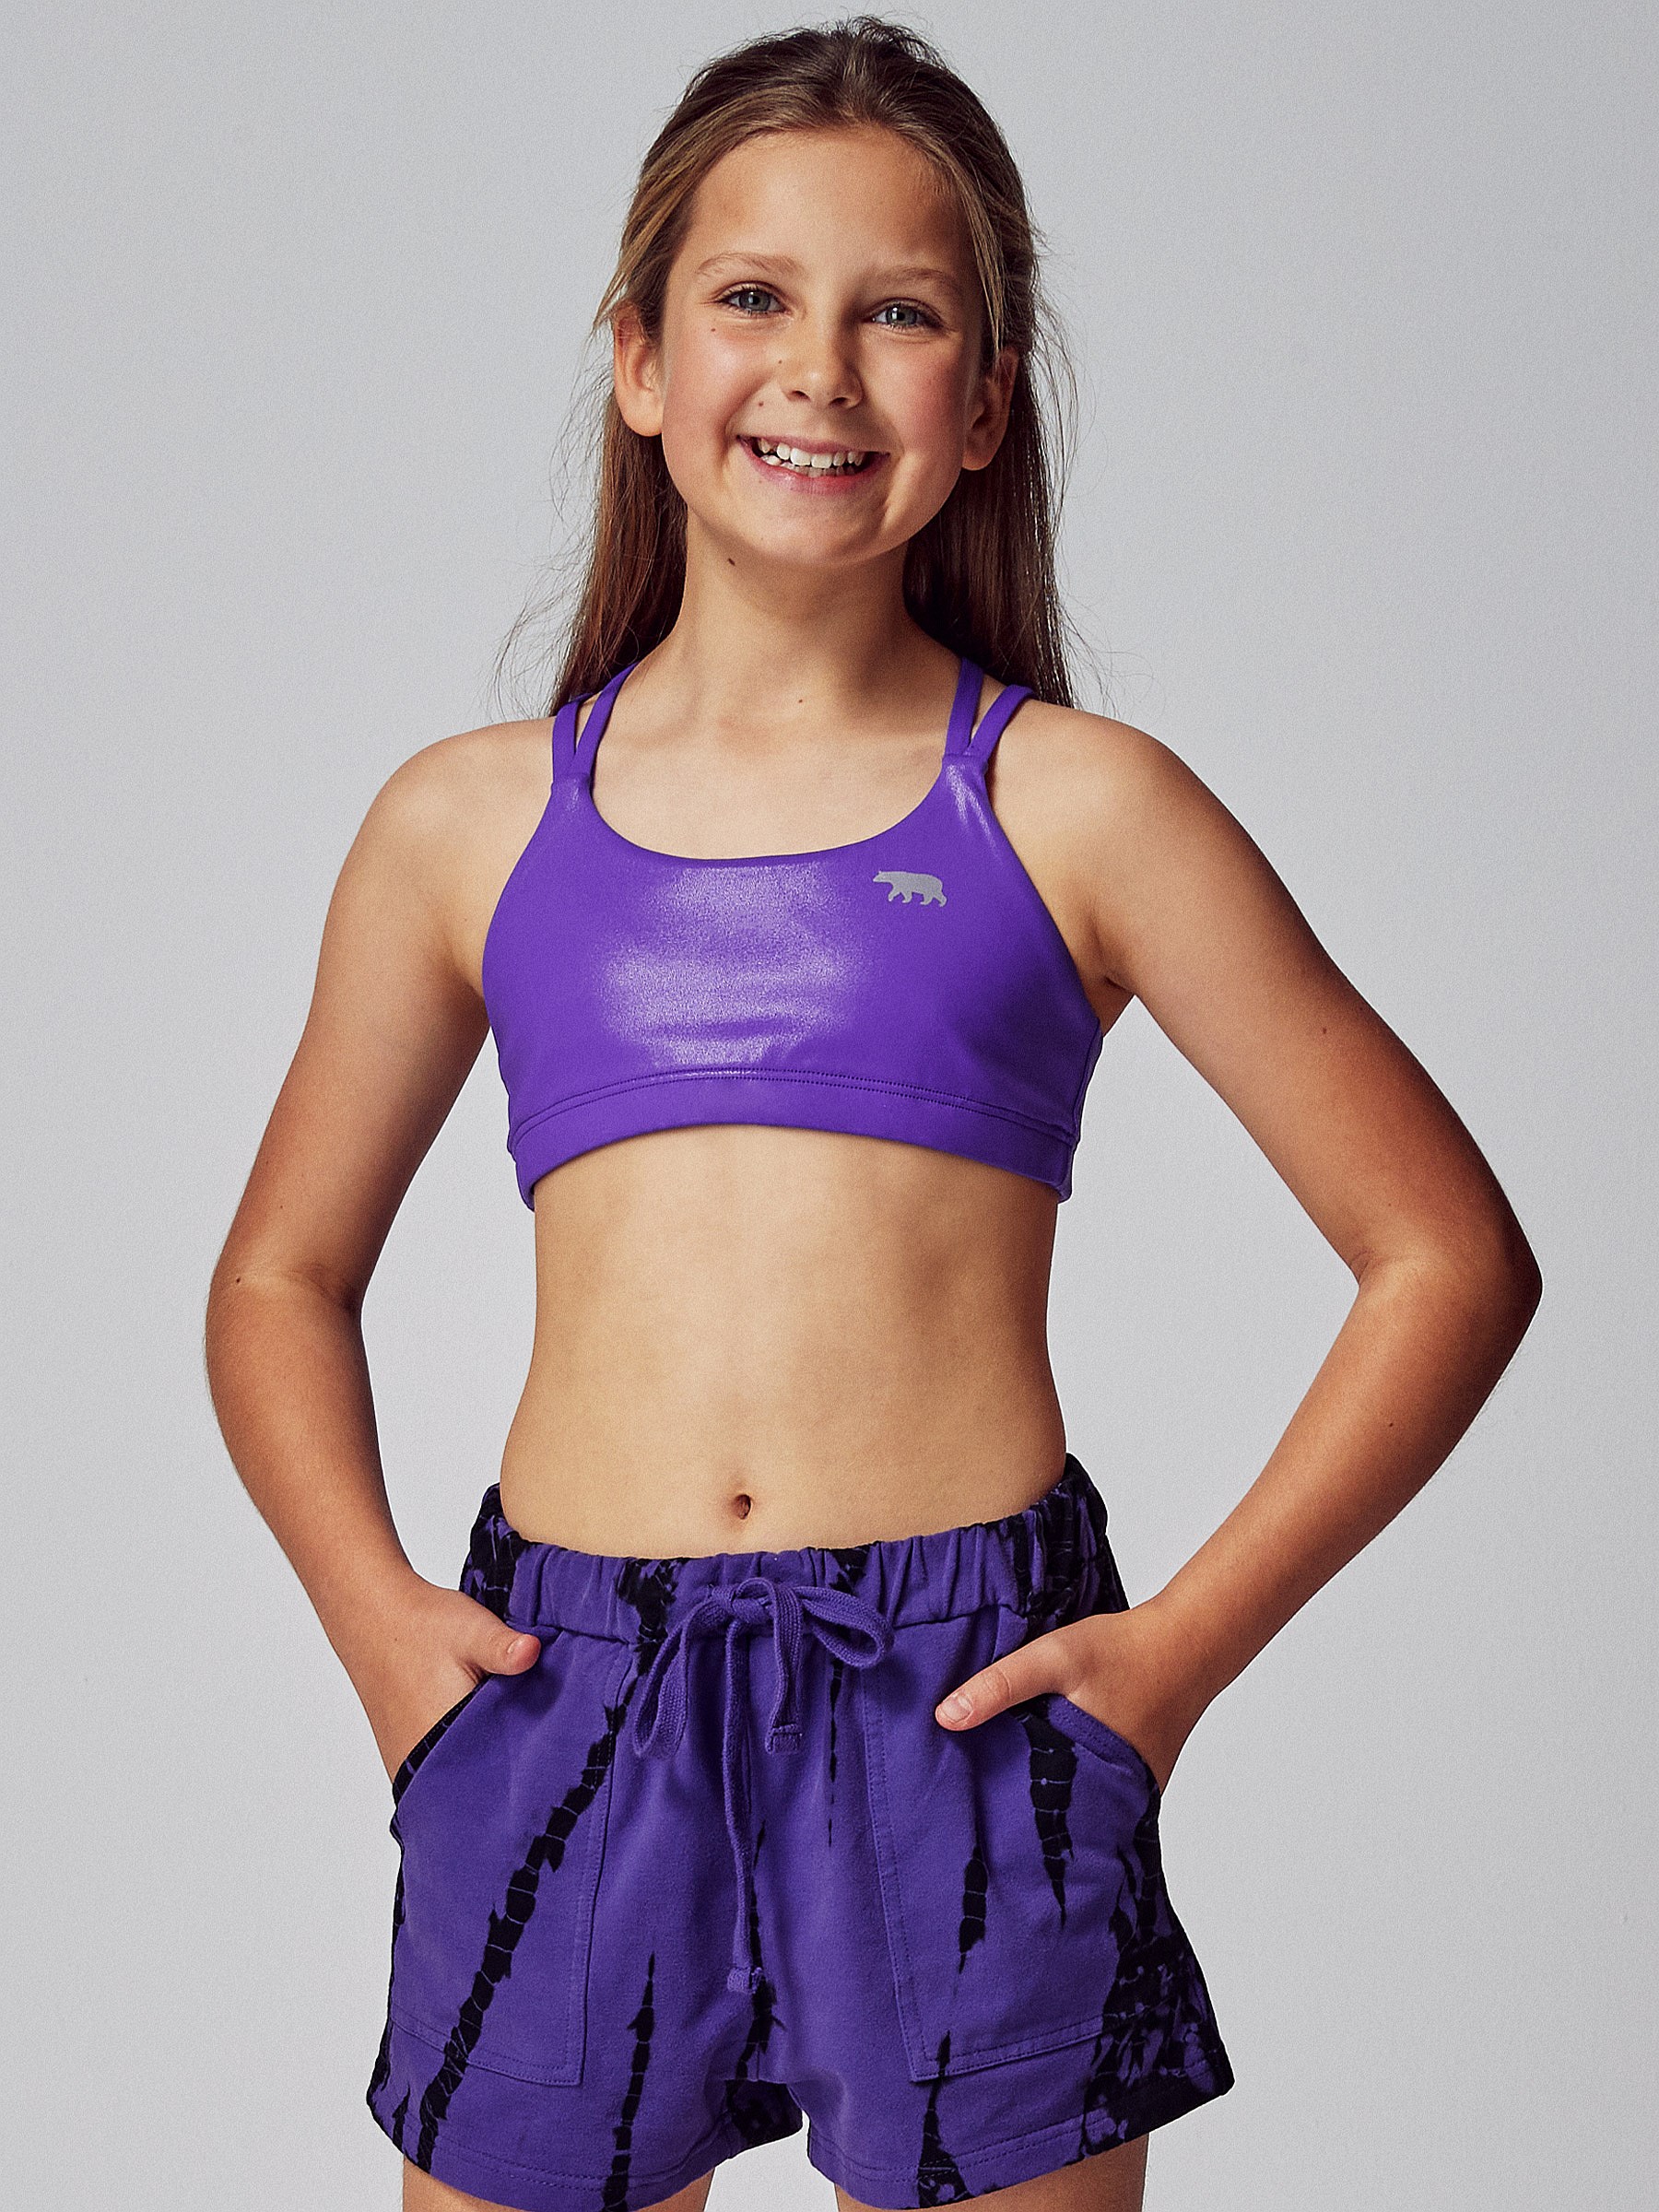 Girls Activewear and Sports Bras. Running Bare Sportswear - Lotus Sports Bra  - Girls